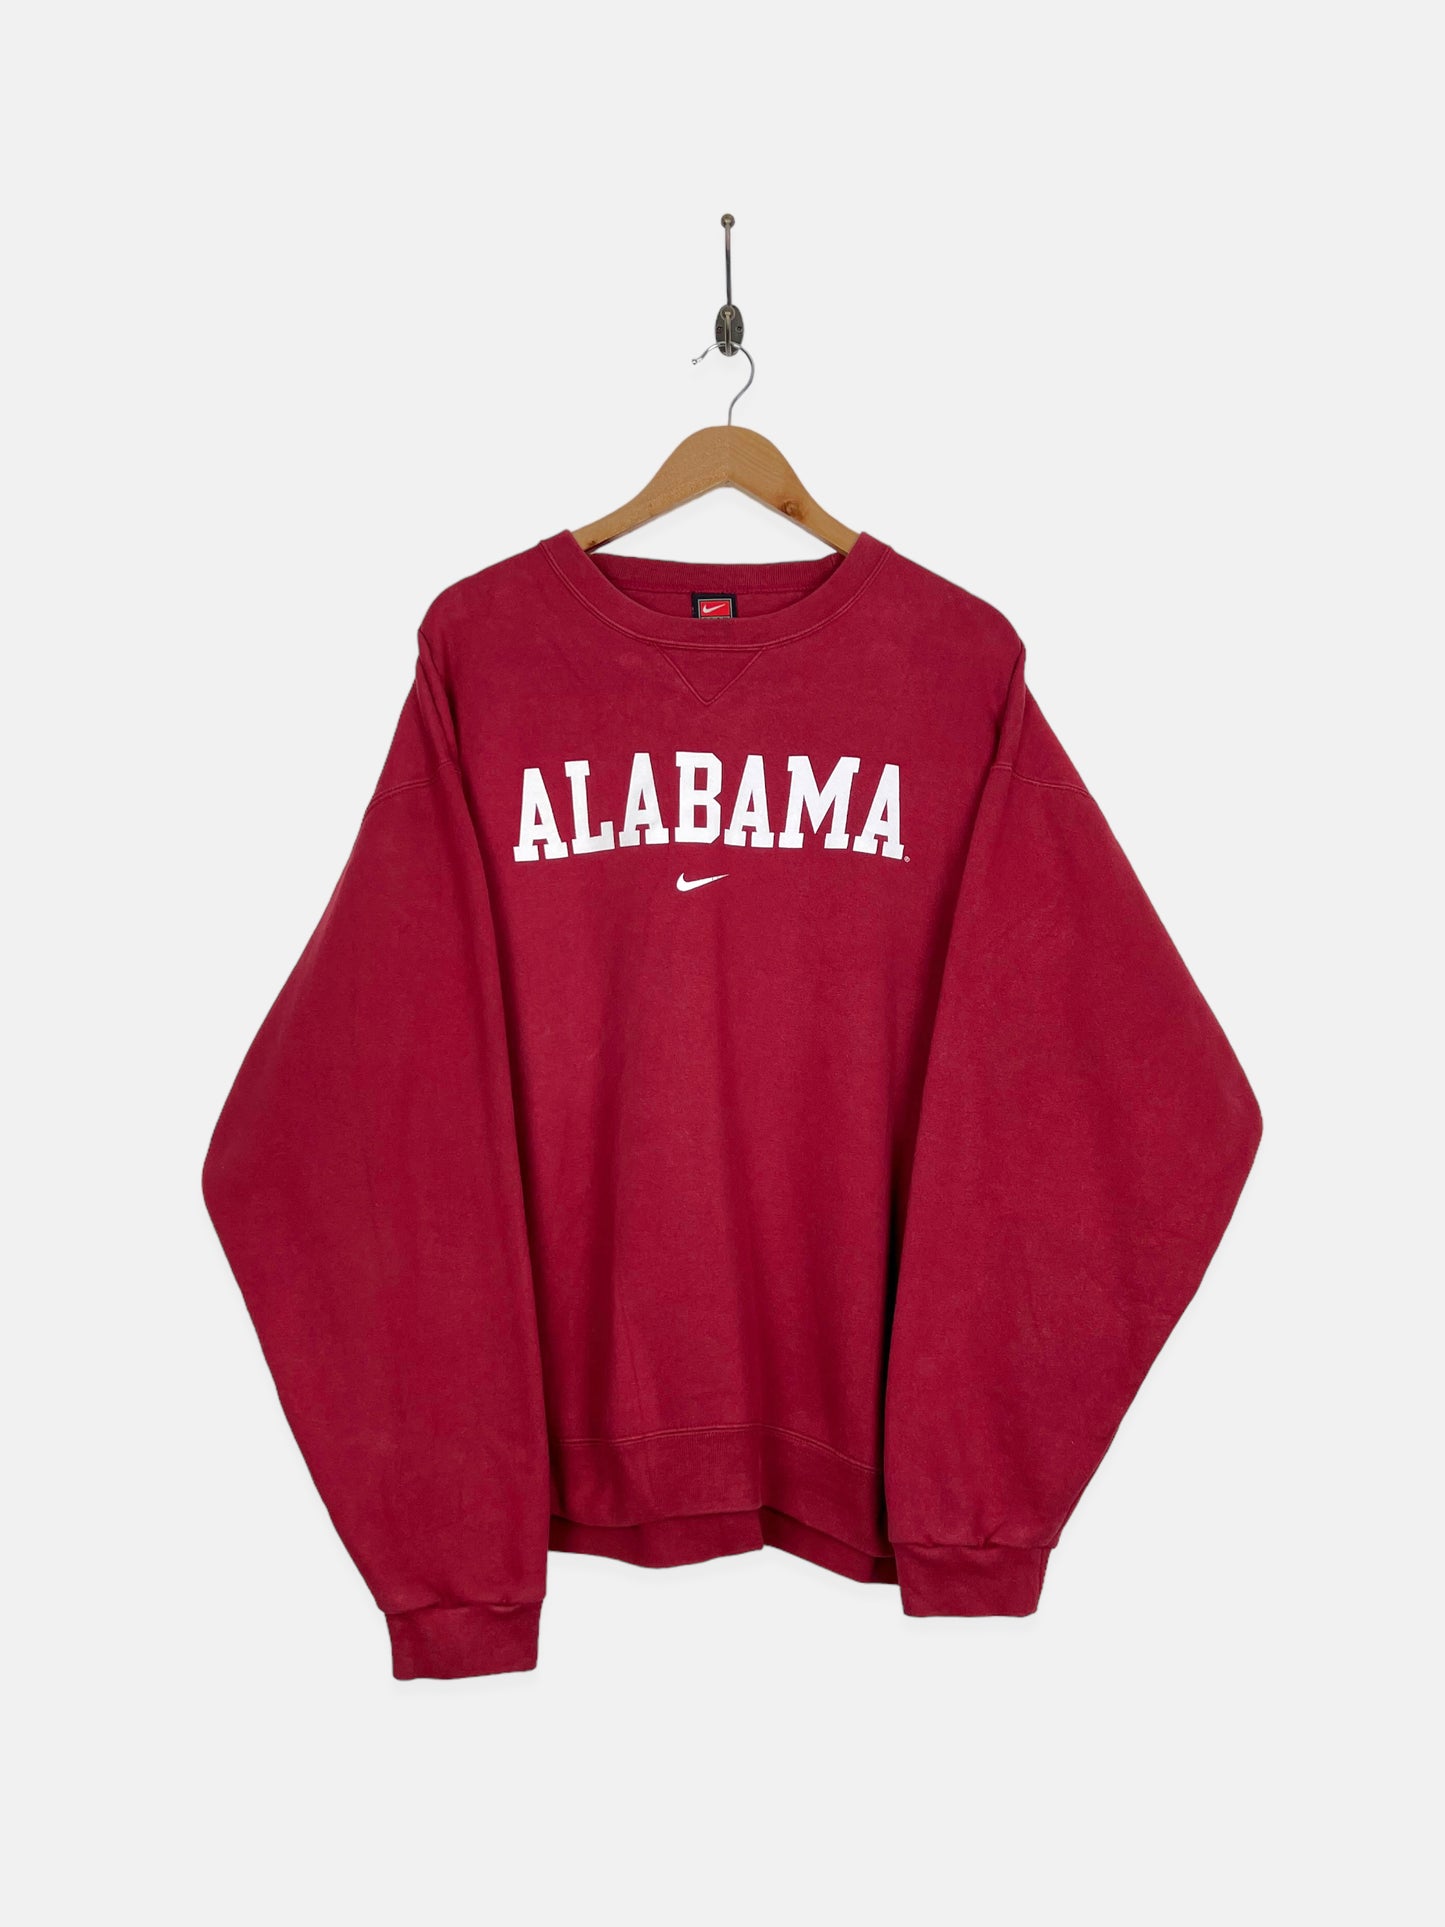 90's Nike Alabama Vintage Sweatshirt Size XL-2XL